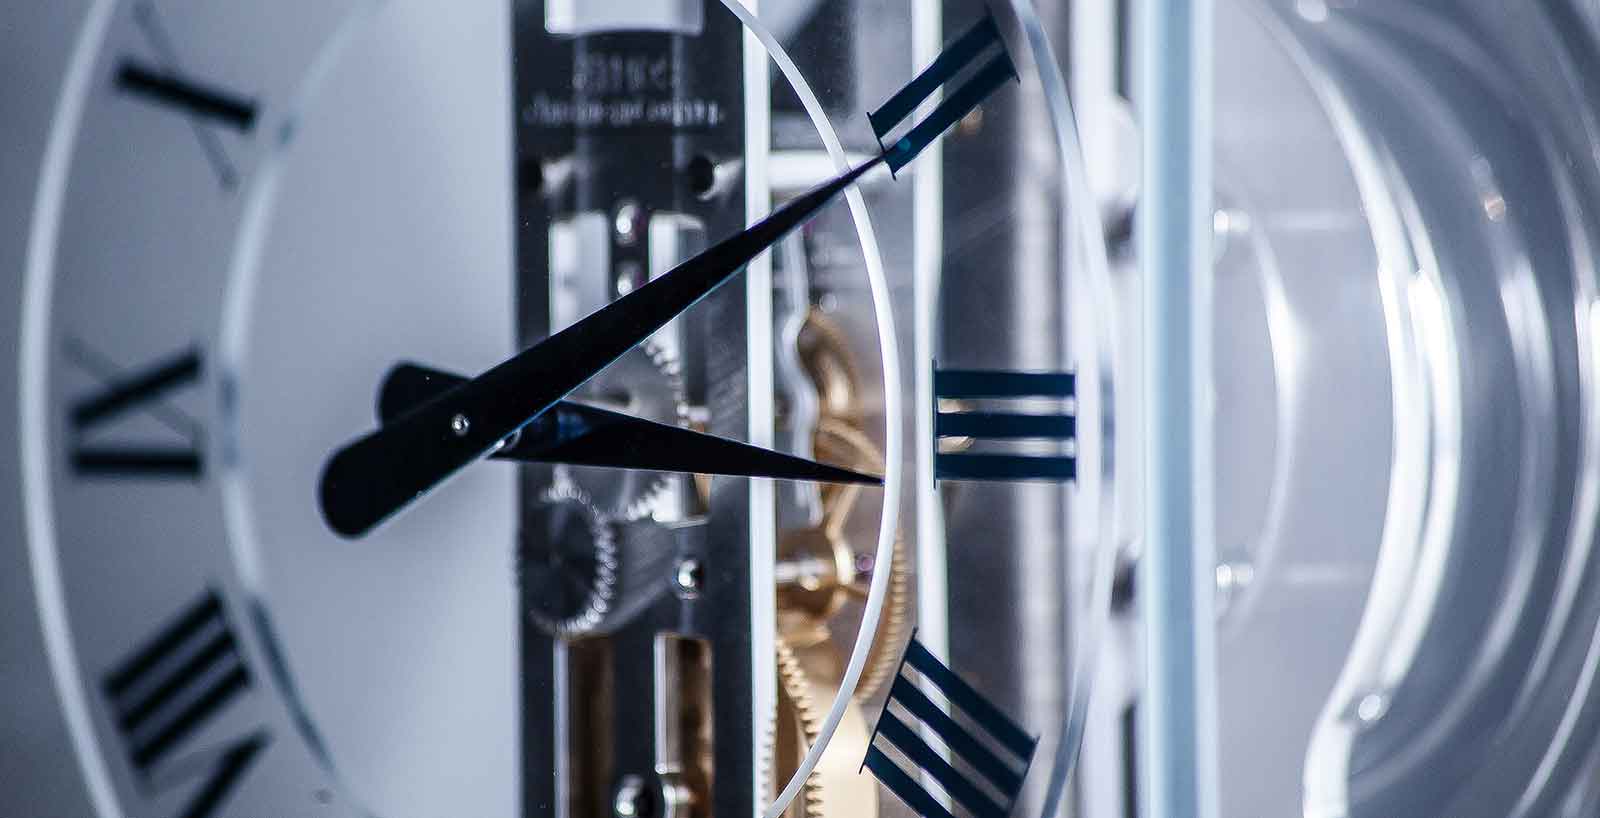 Image Clock